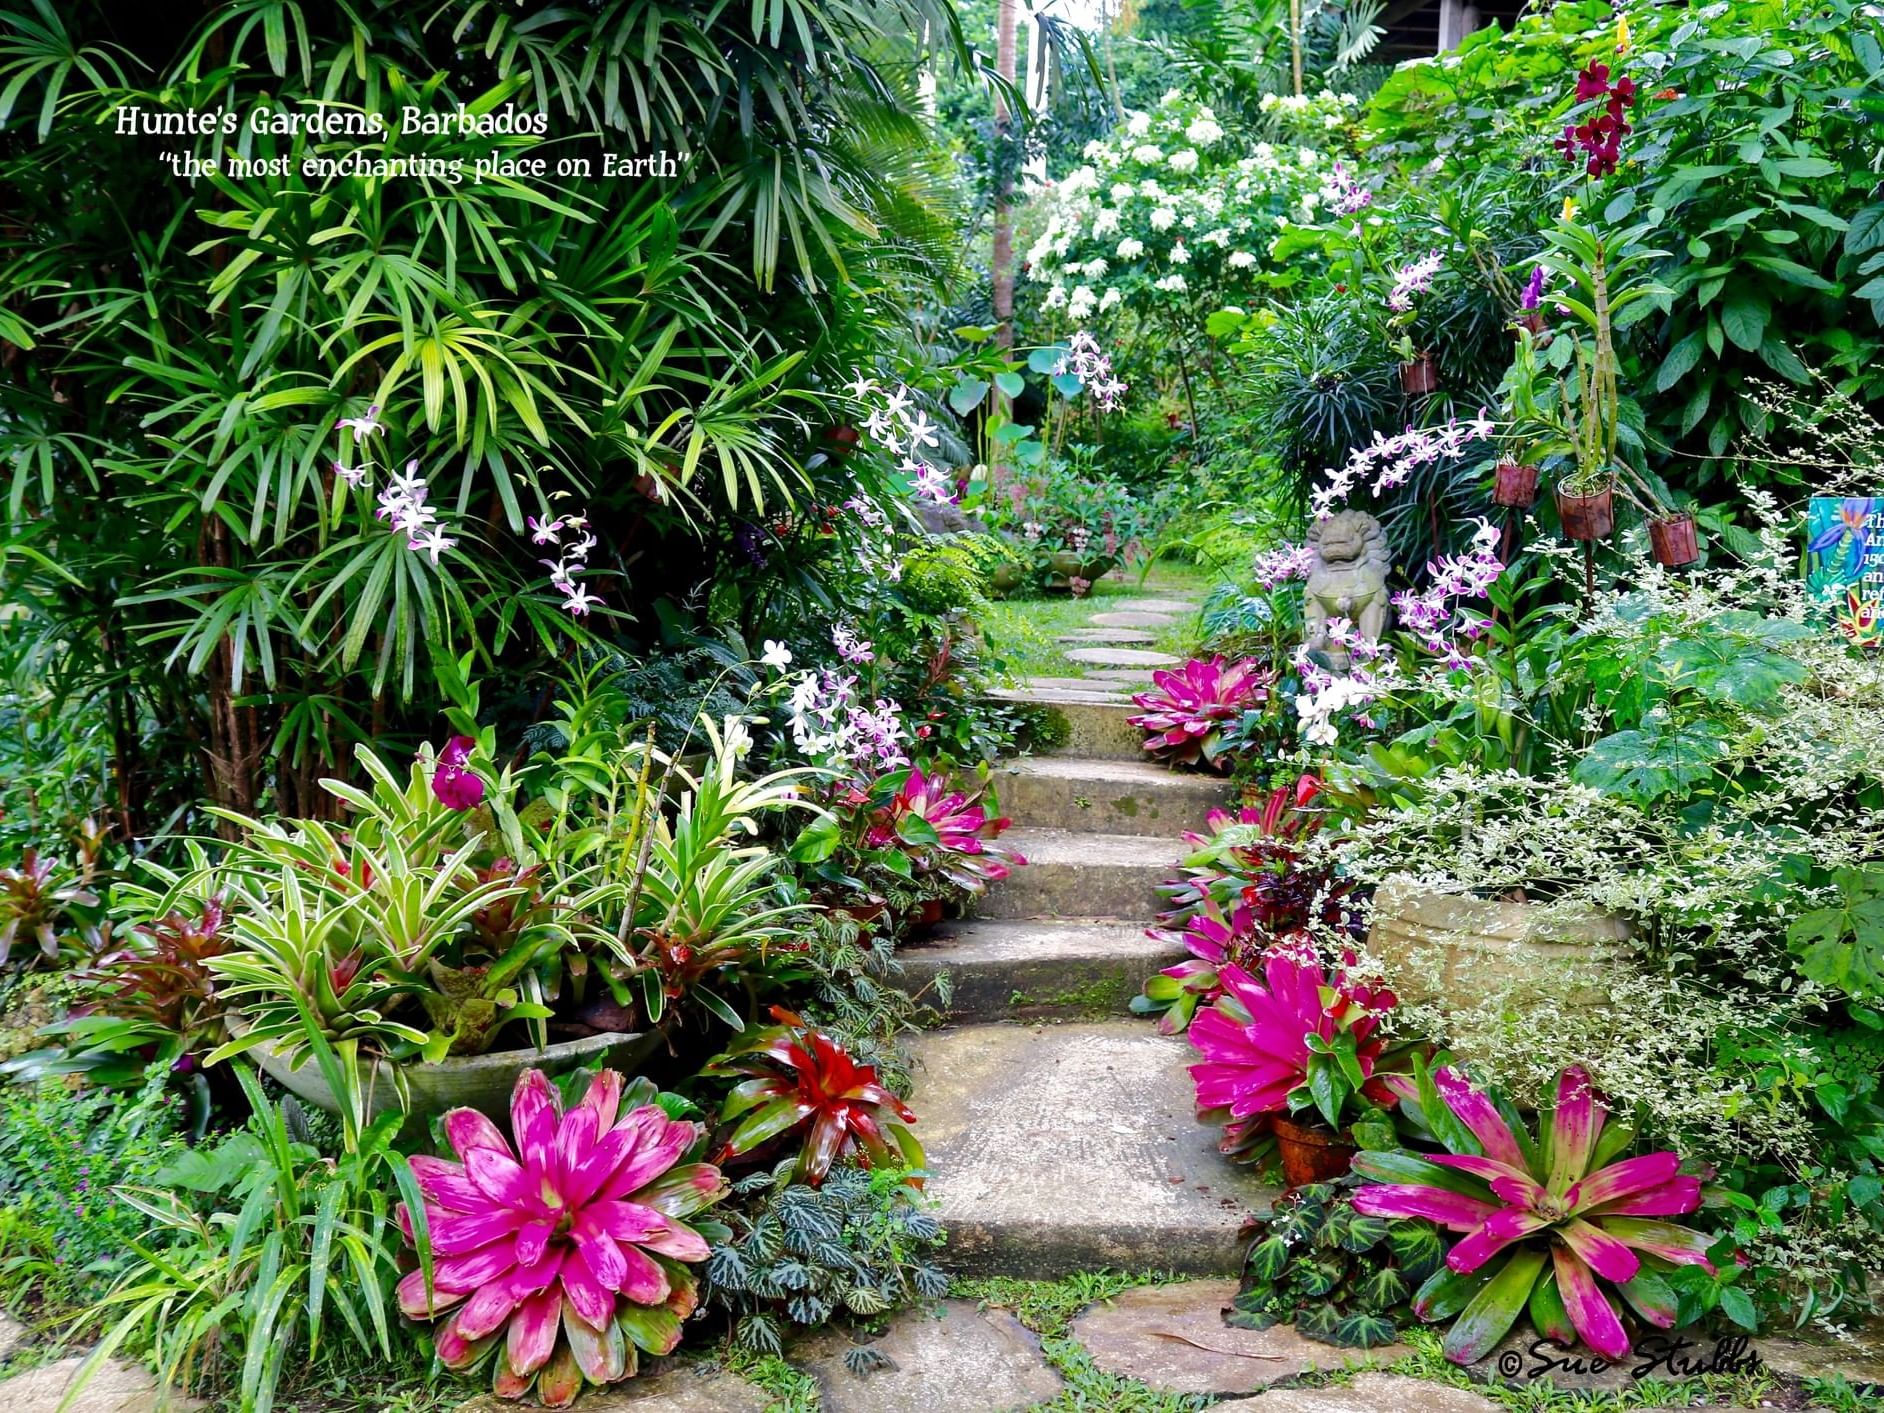 Footpath in the Hunte’s Gardens near Sugar Bay Barbados